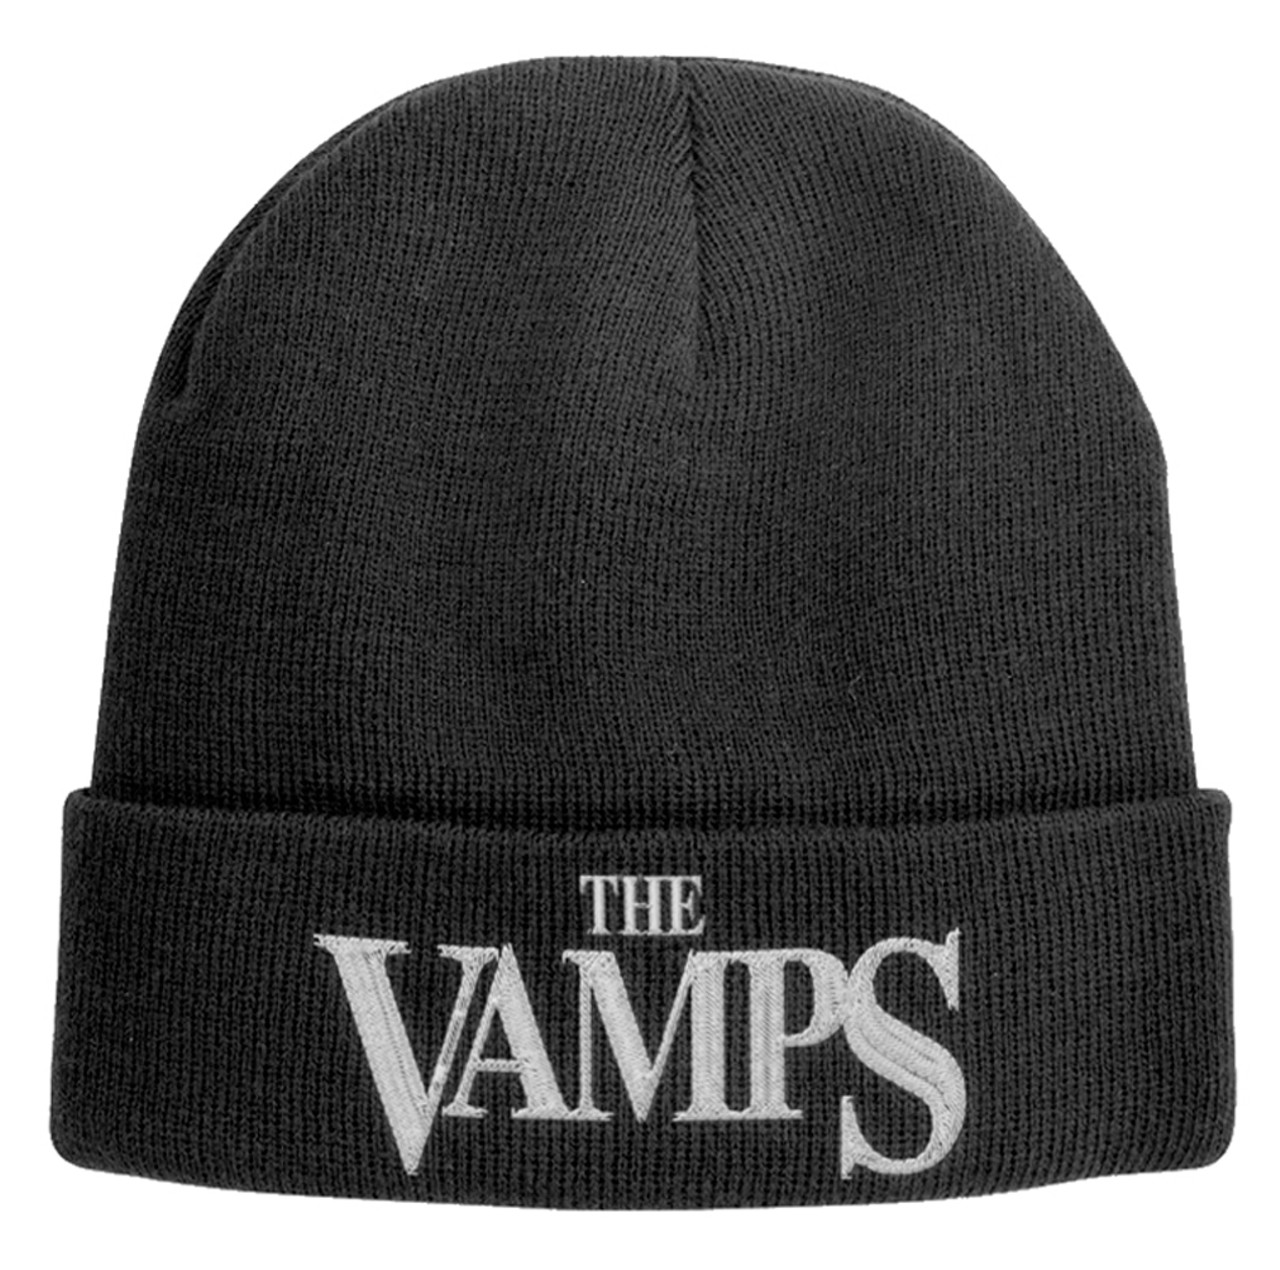 The Vamps 'Logo' Beanie Hat